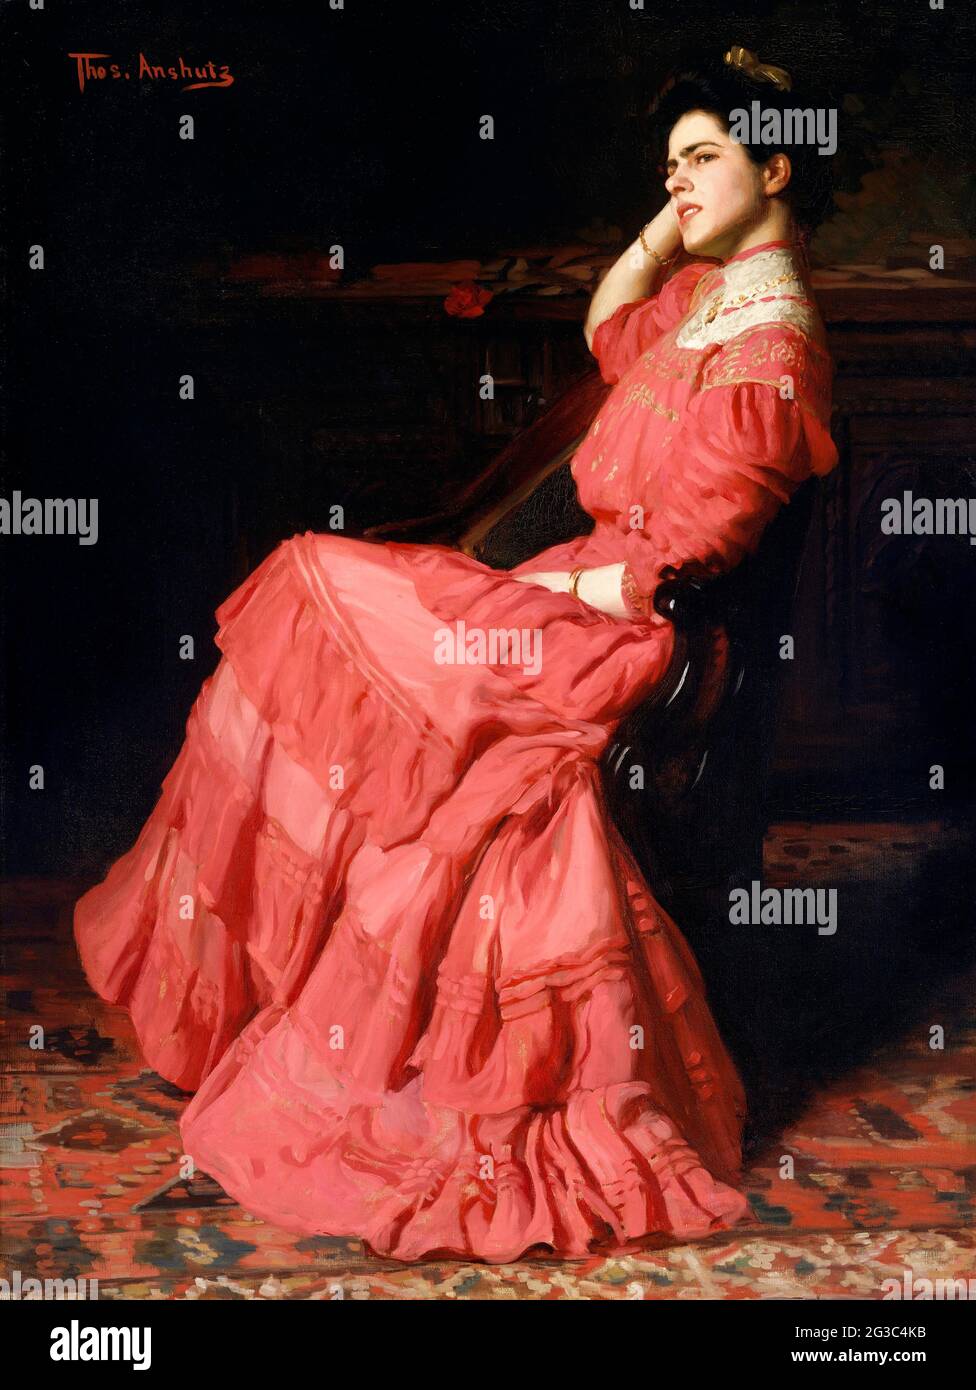 Thomas Anshutz. Painting entitled 'A Rose' by Thomas Pollock Anshutz (1851-1912), oil on canvas, 1907 Stock Photo